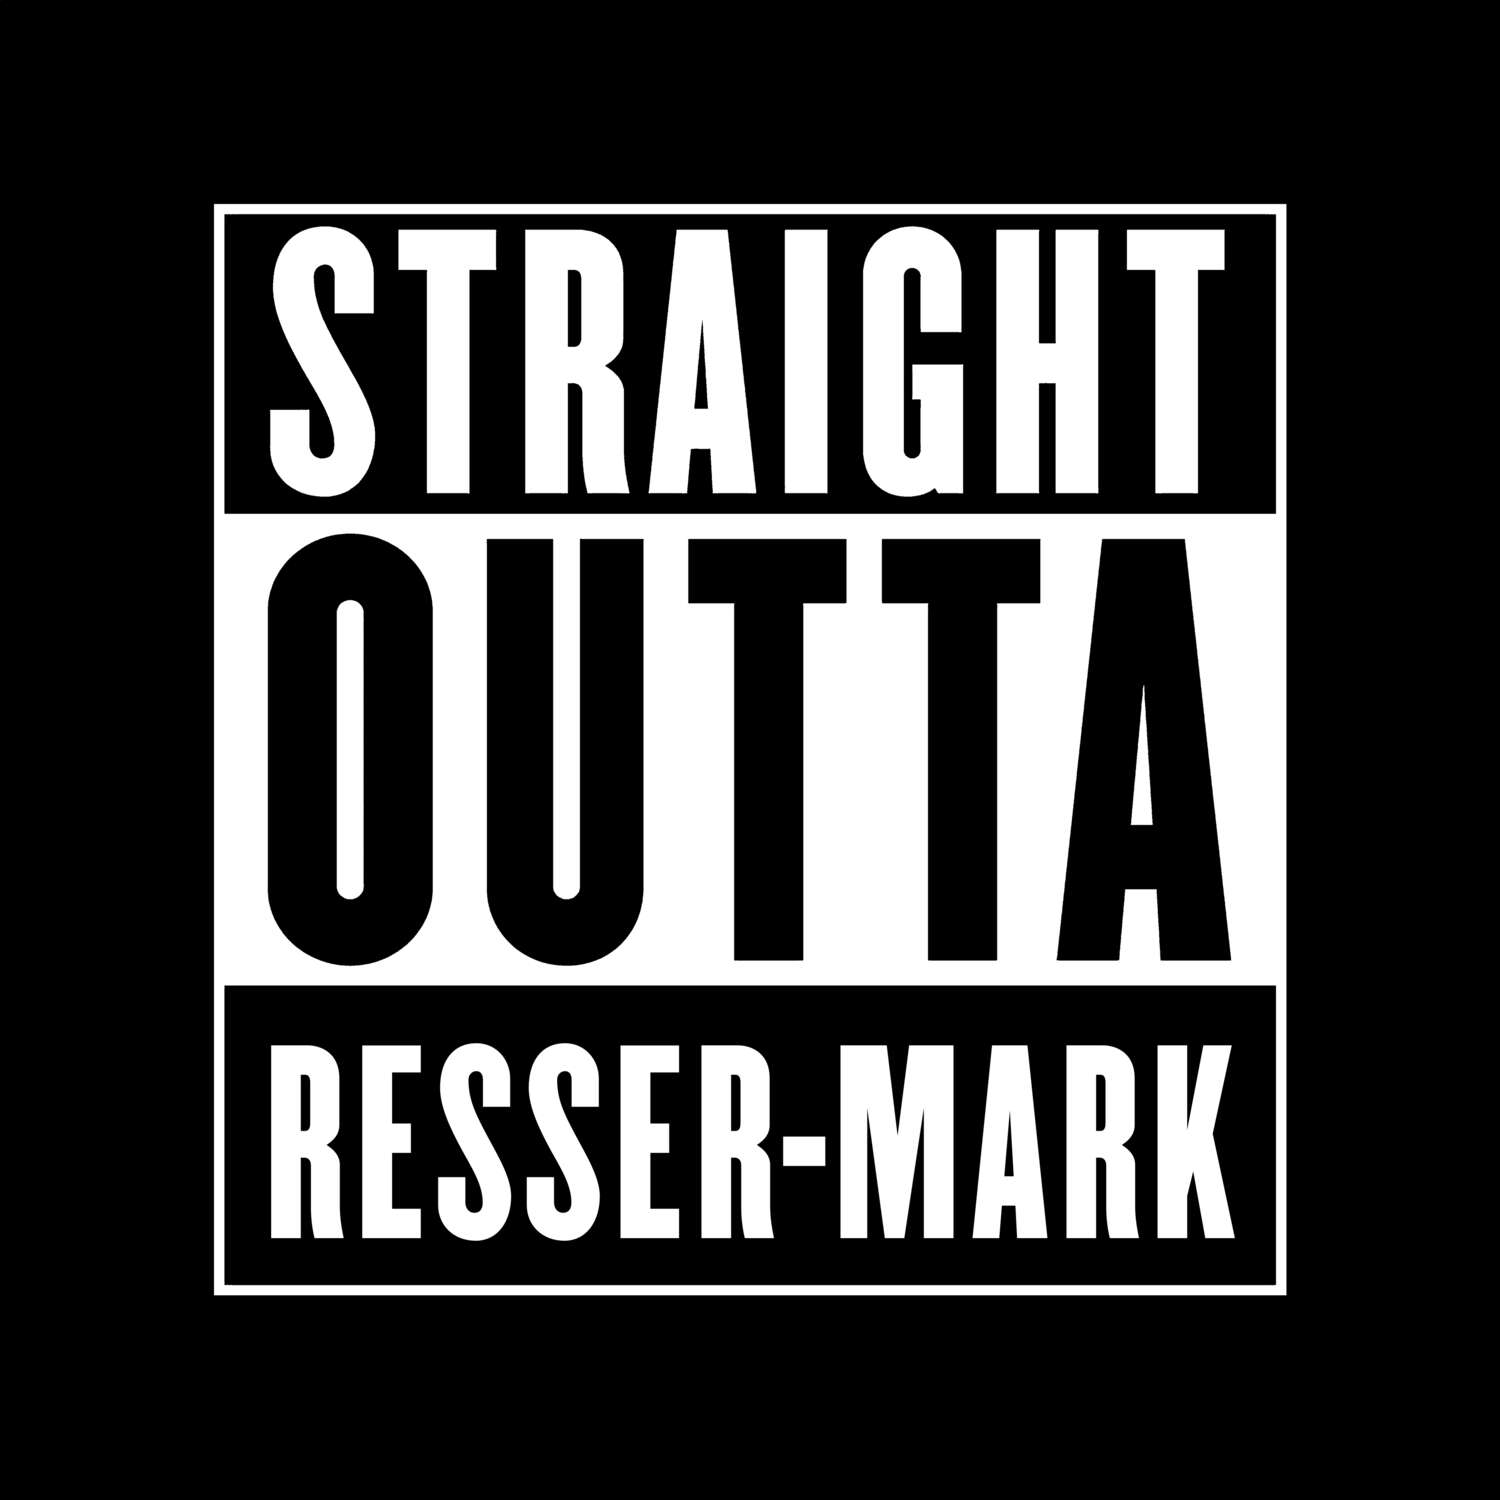 Resser-Mark T-Shirt »Straight Outta«